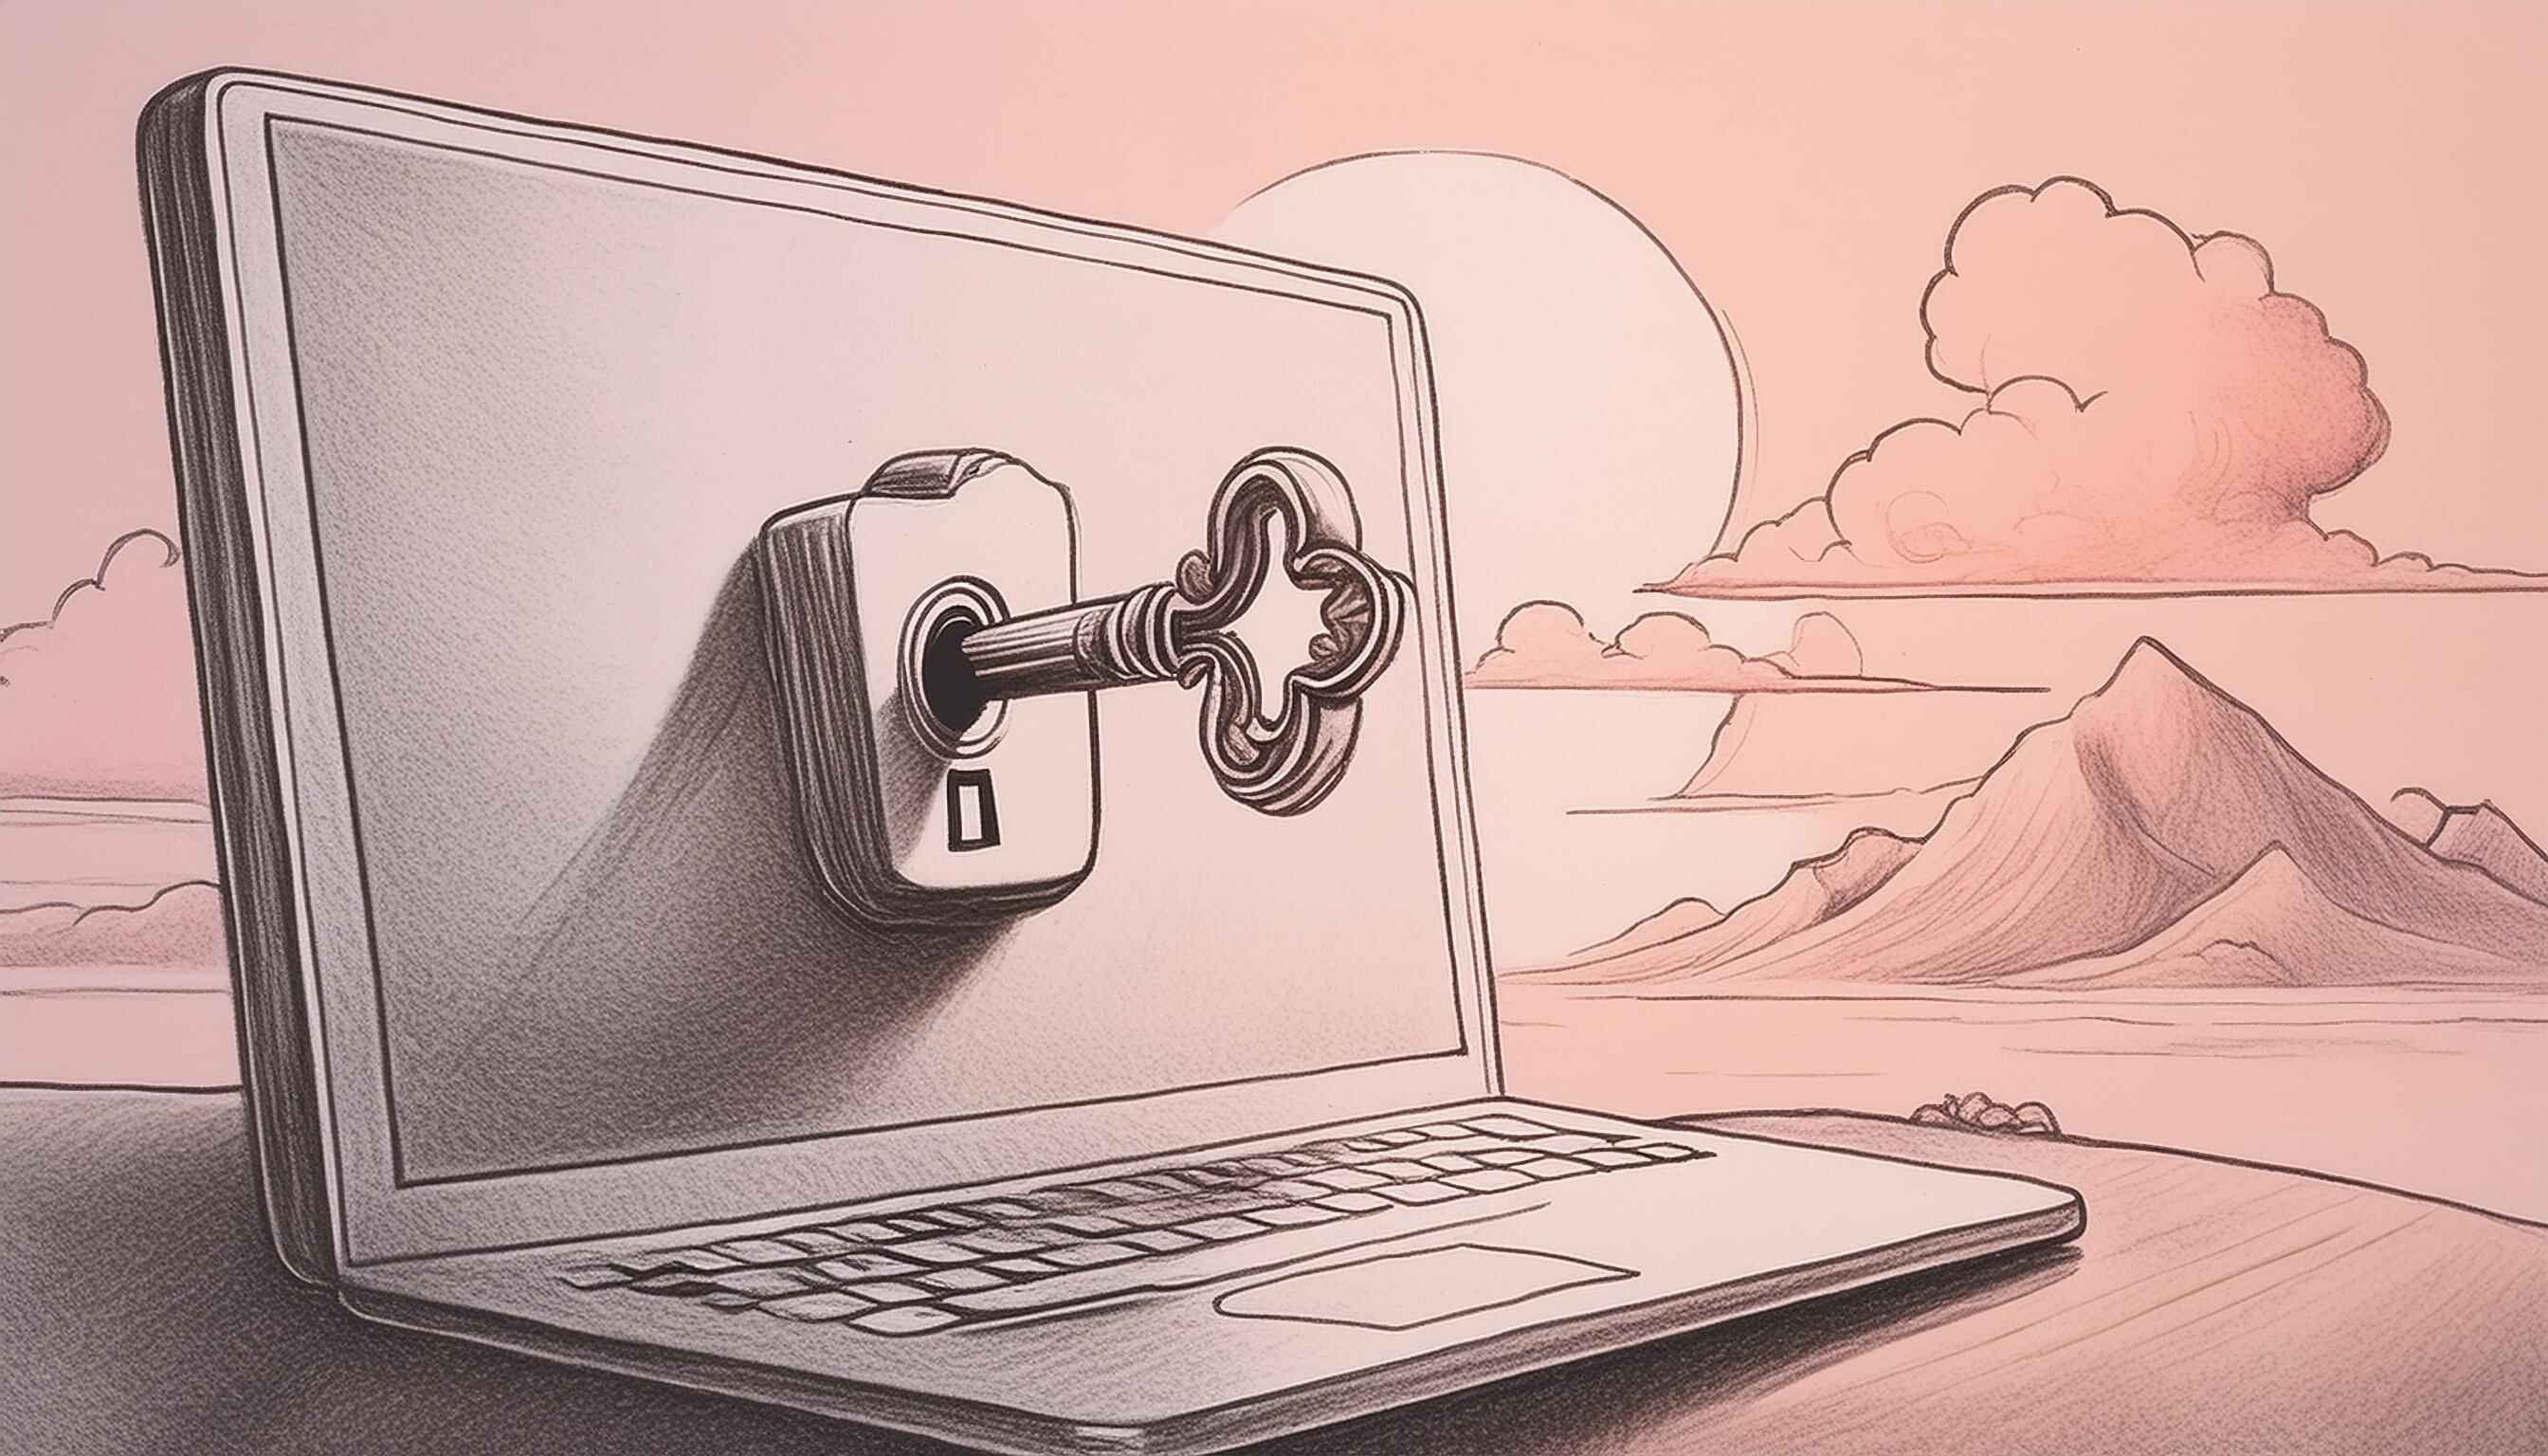 Illustration of a key unlocking a laptop, symbolizing Antioxi's account management Help Desk support.